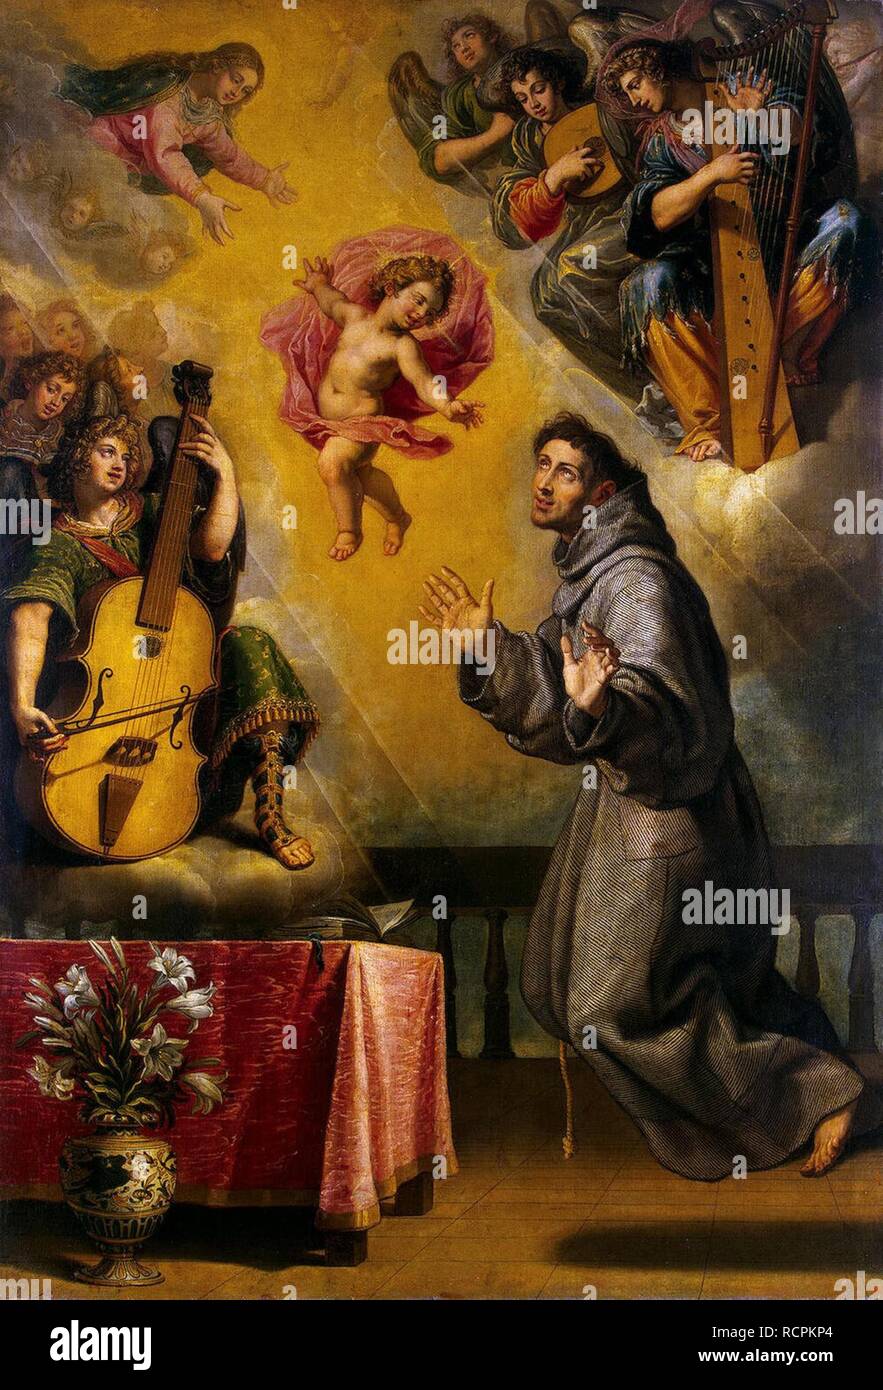 Vision of Saint Antony of Padua. Museum: State Hermitage, St. Petersburg. Author: Carducho (Carducci), Vincente. Stock Photo